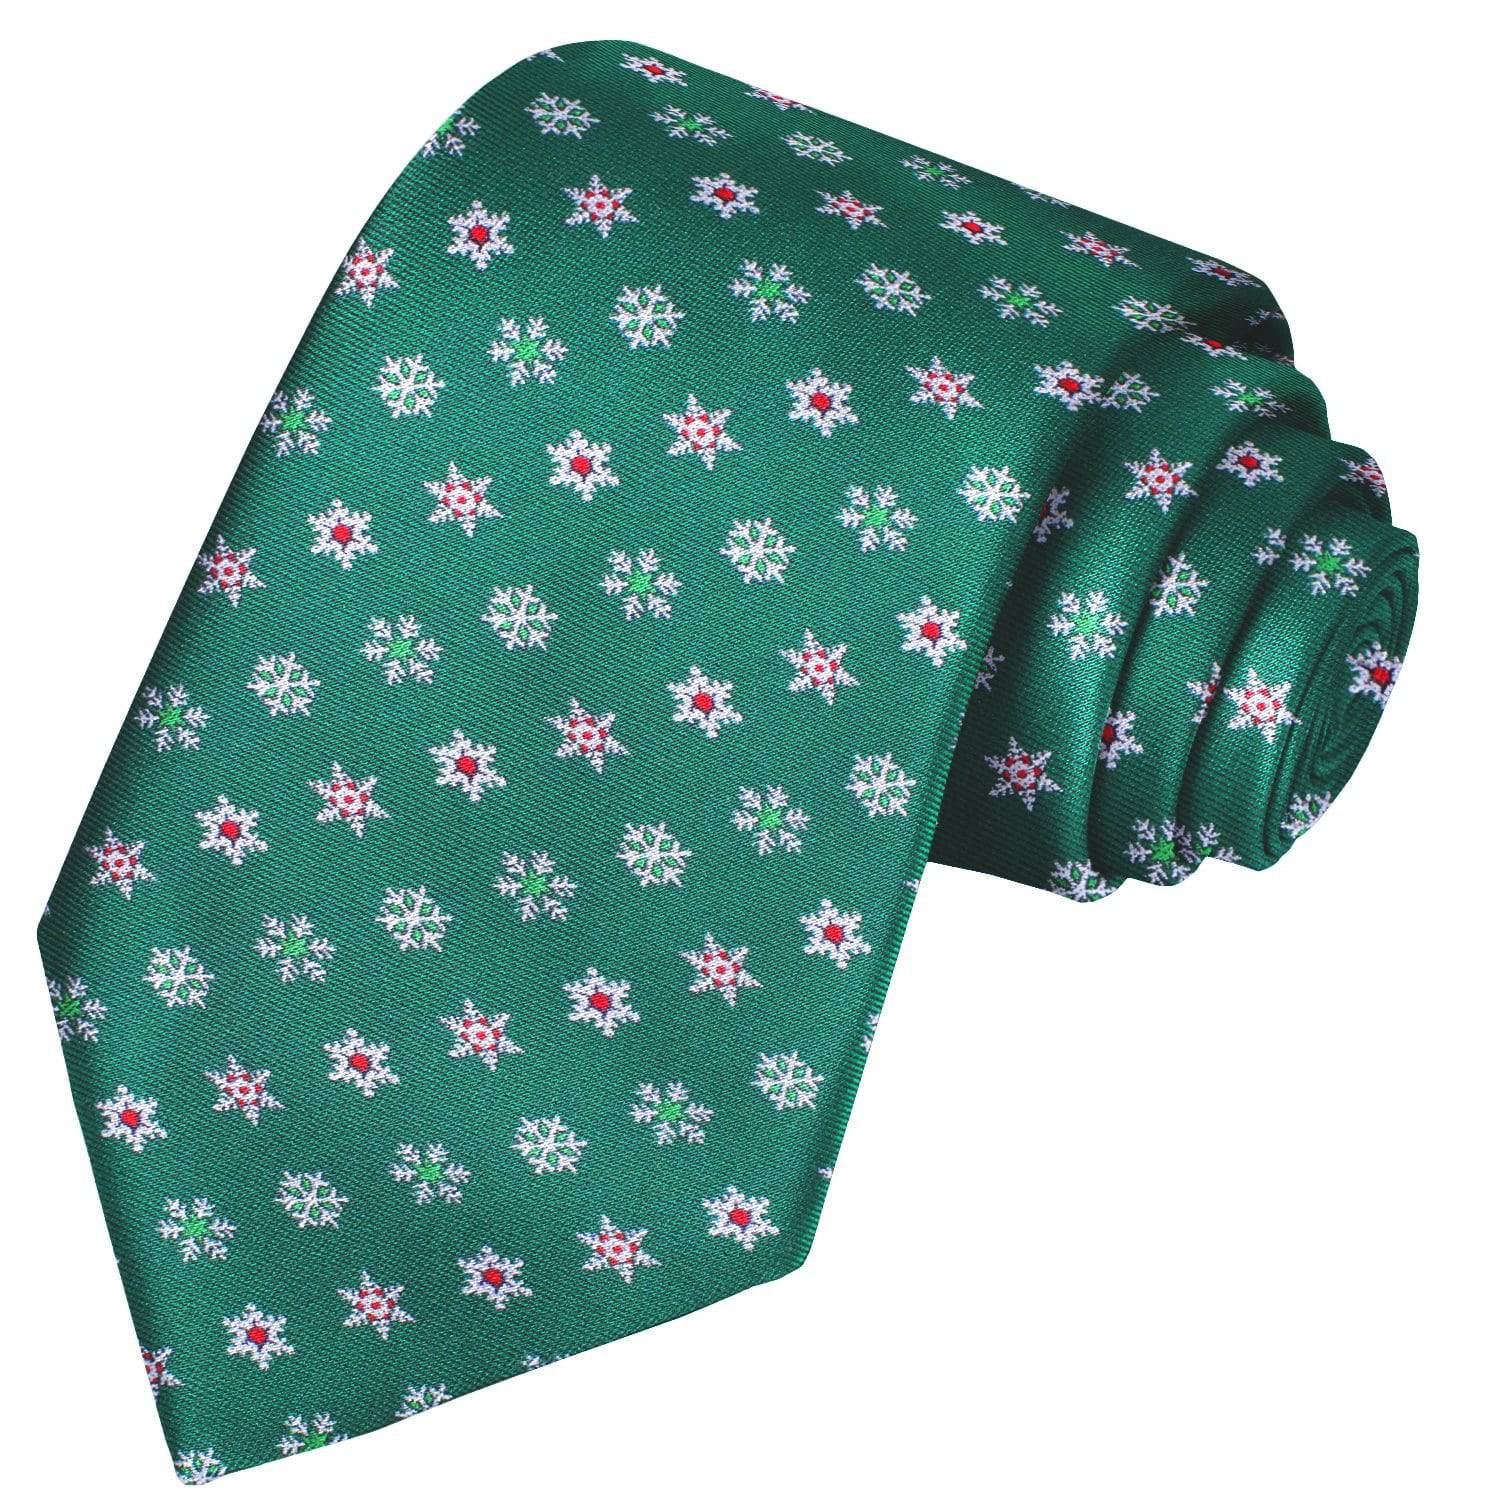 Snow Flakes Christmas Tie - Tie, bowtie, pocket square  | Kissties